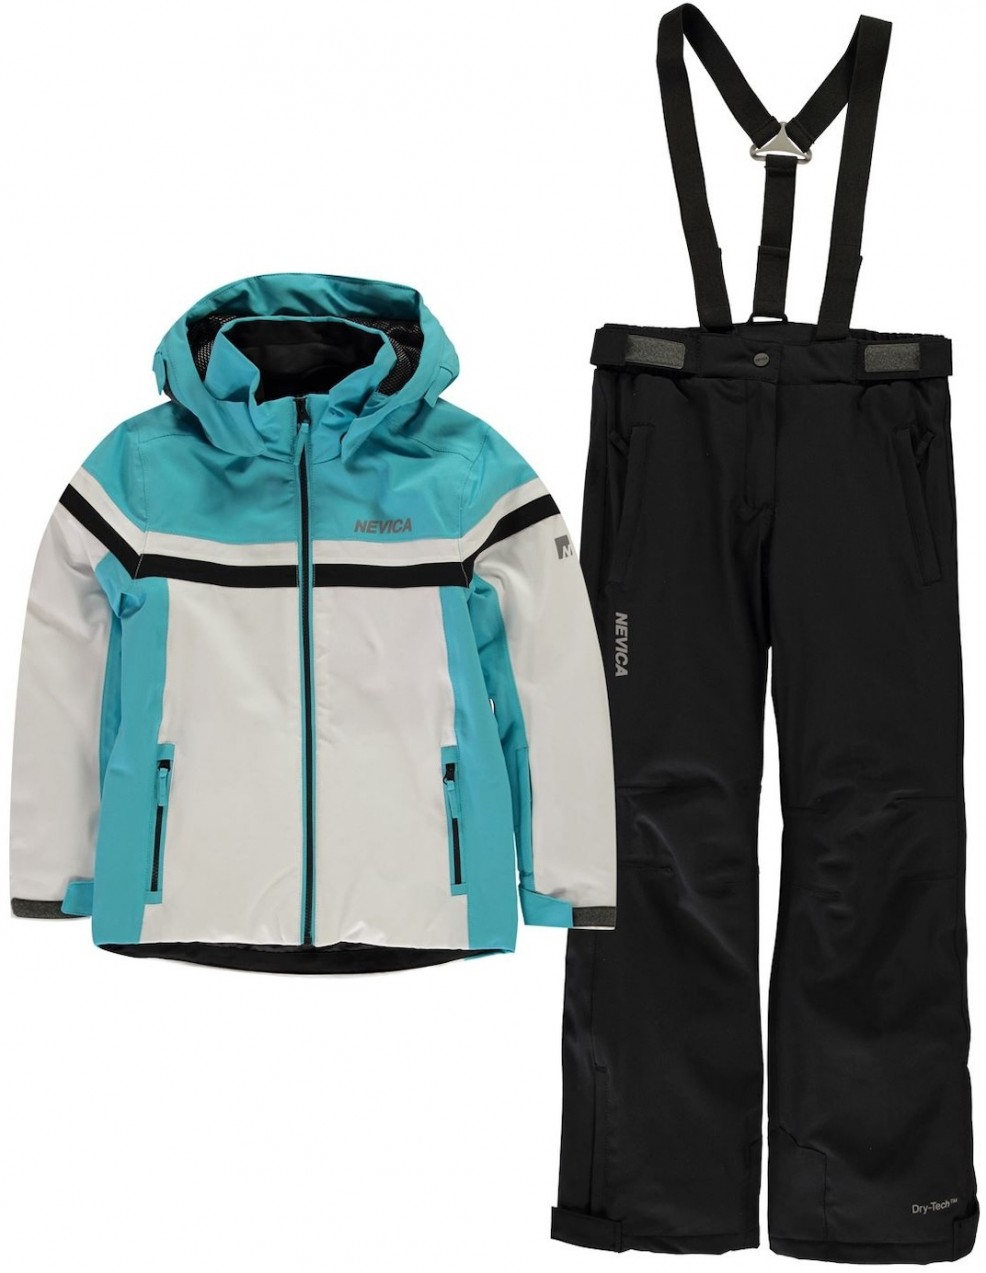 Nevica Nancy Skiing Suit Set